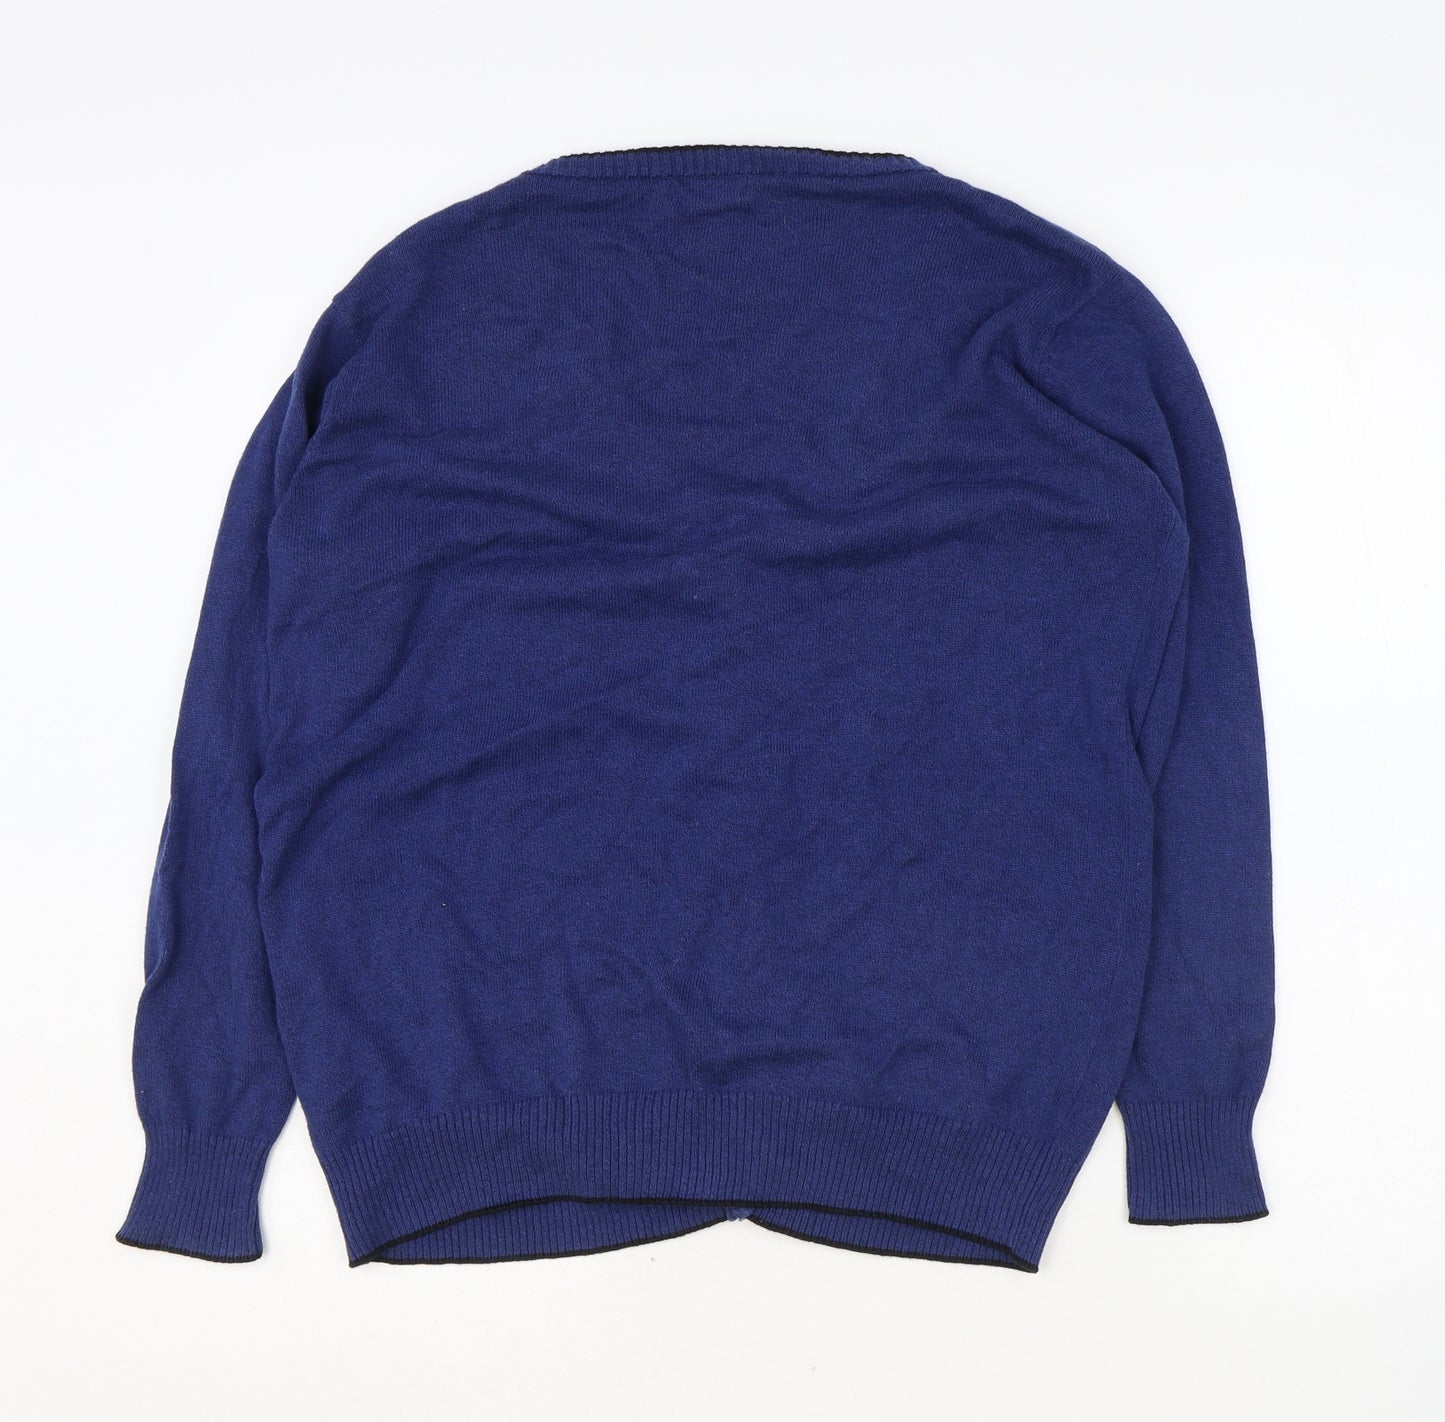 Pumpkin Patch Girls Blue V-Neck 100% Cotton Cardigan Jumper Size 11 Years Button